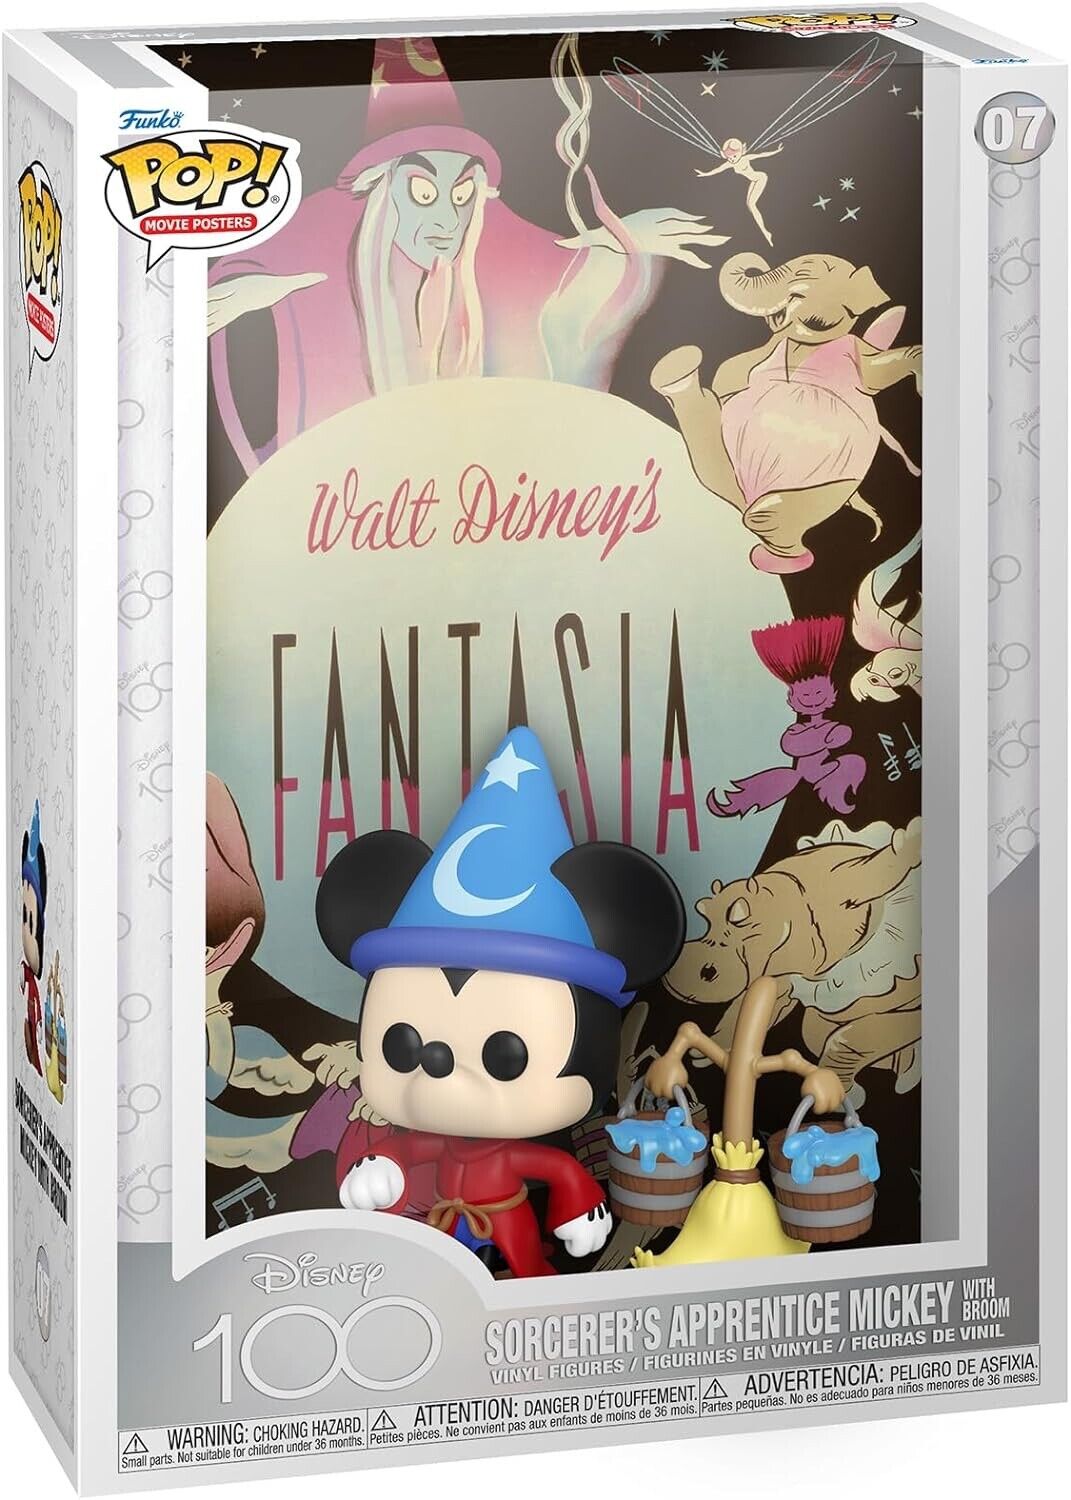 Funko pop Movie Poster Disney 100th Anniversary - Fantasia, Sorcerer's Apprentic